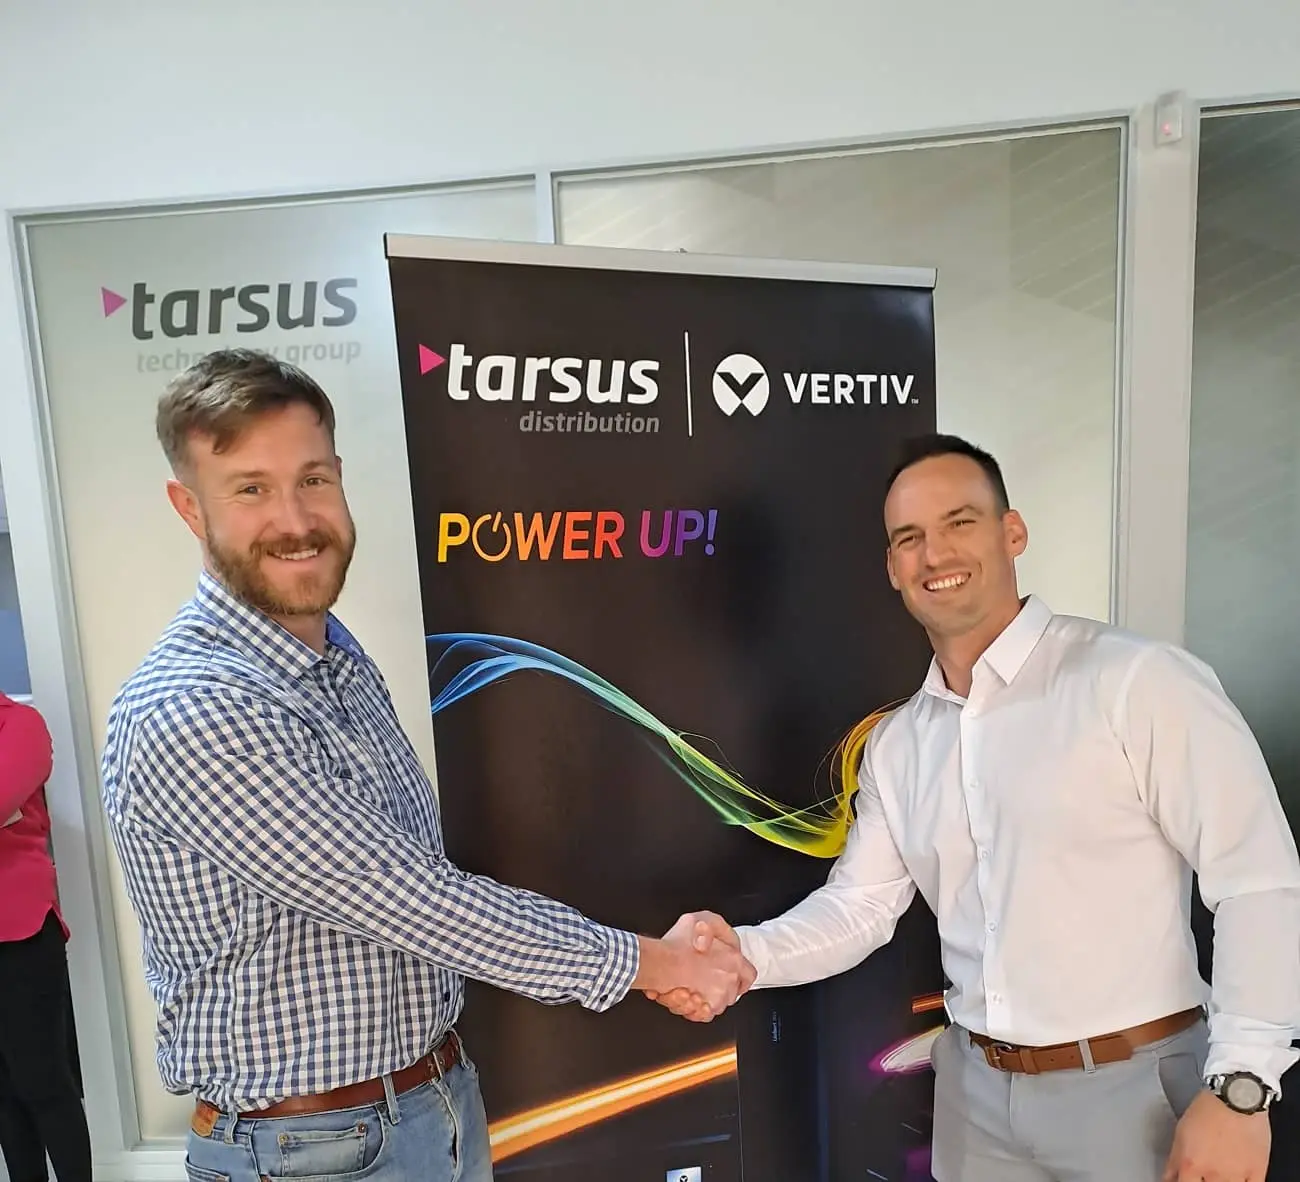 Vertiv and Tarsus partnership